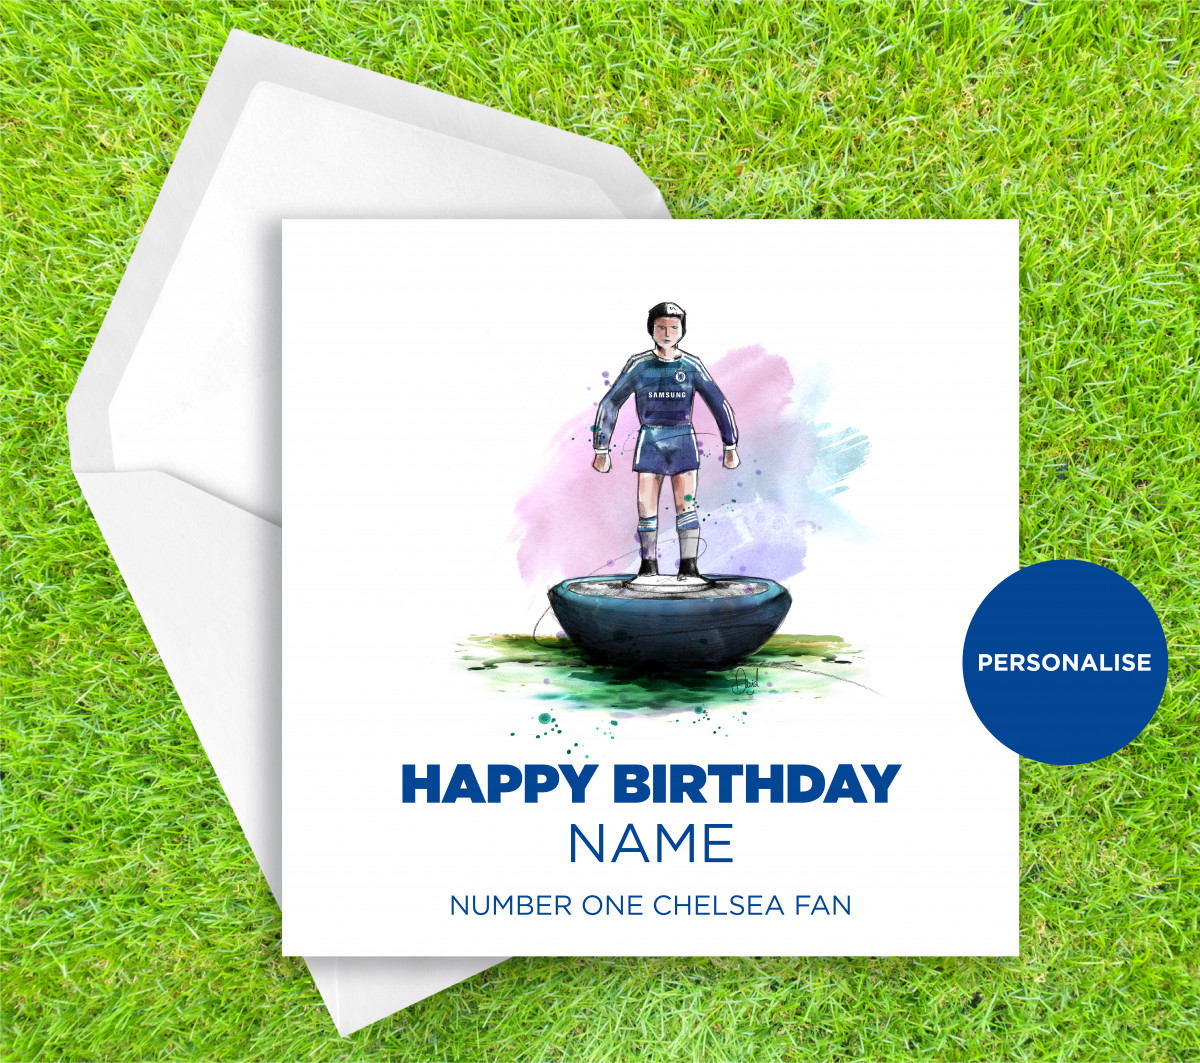 Chelsea, Subbuteo, personalised birthday card